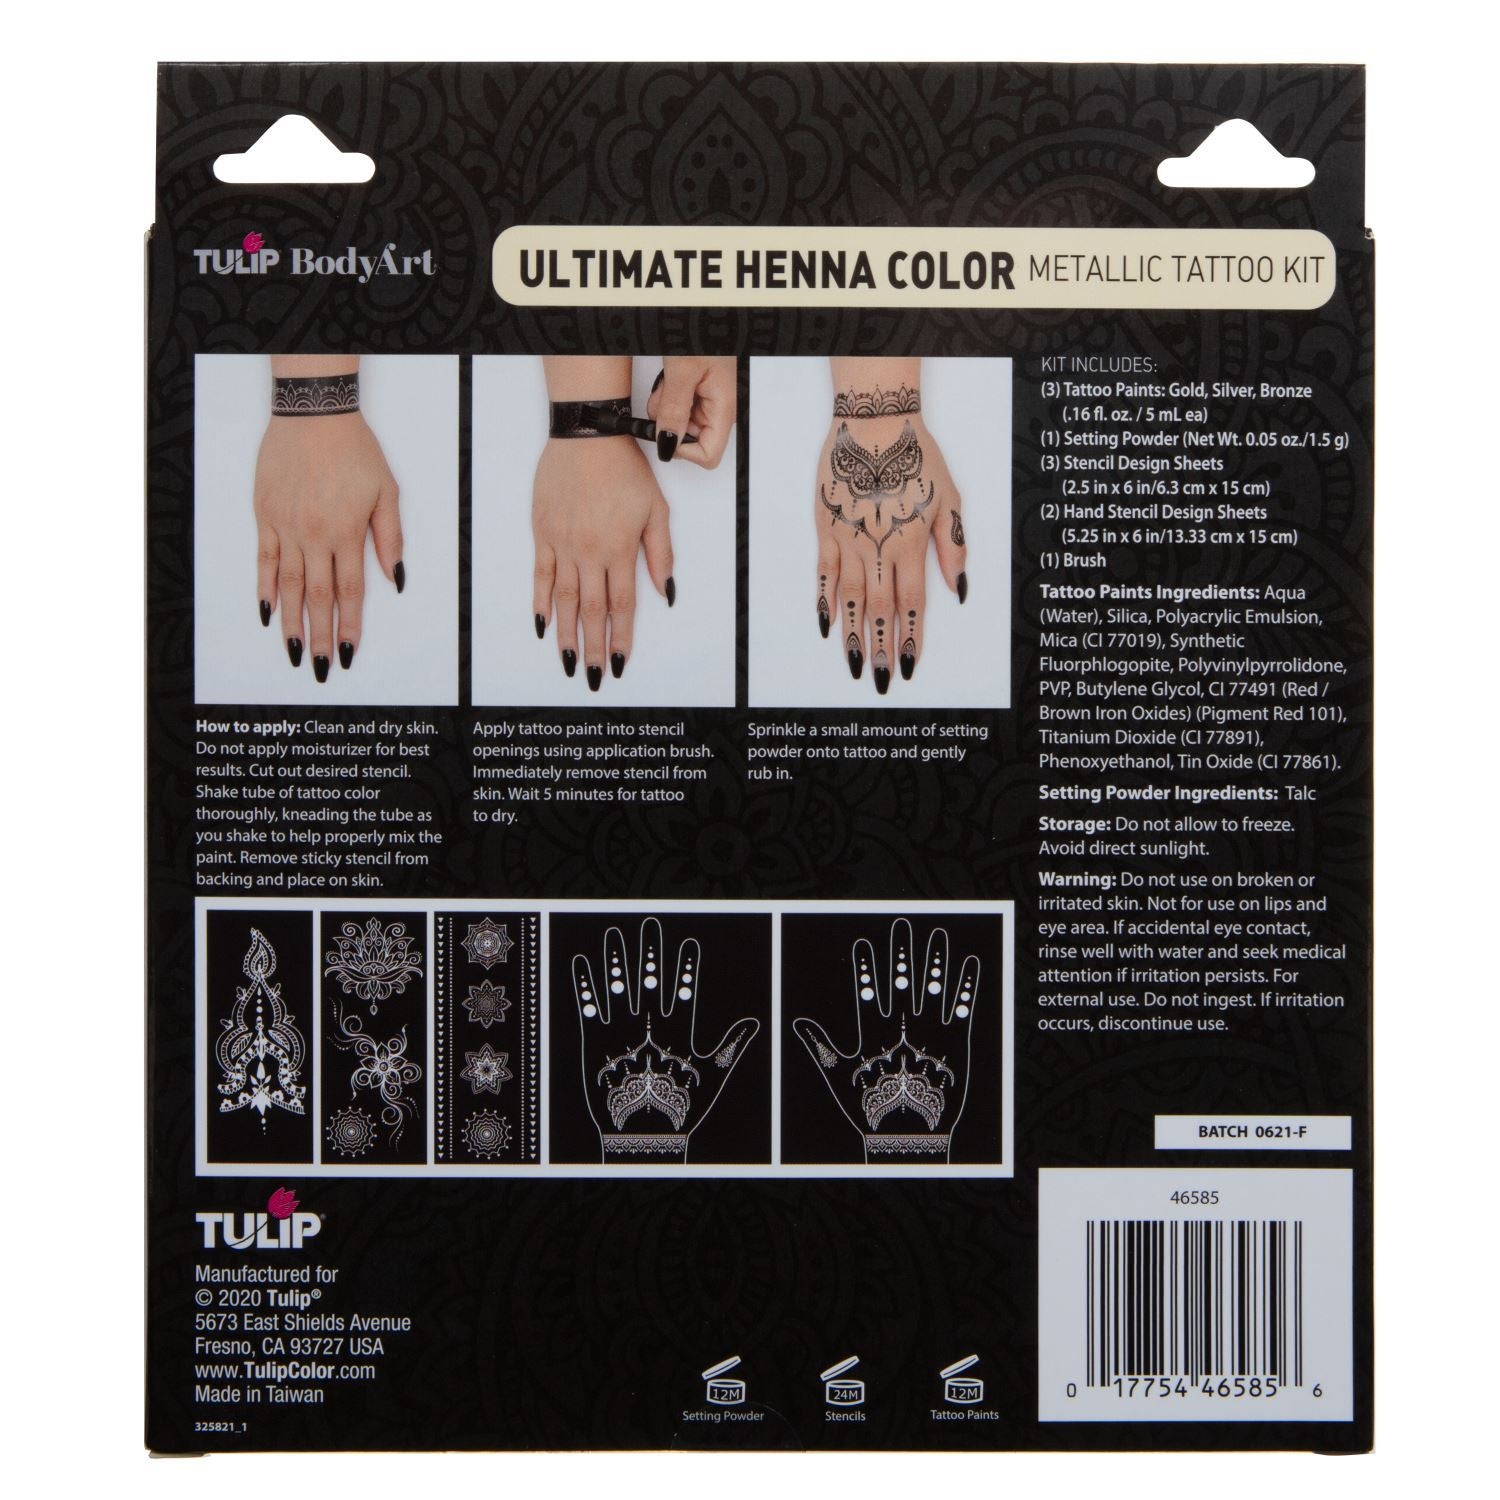 Tulip Body Art Ultimate Henna Color Metallic Tattoo Kit - 2